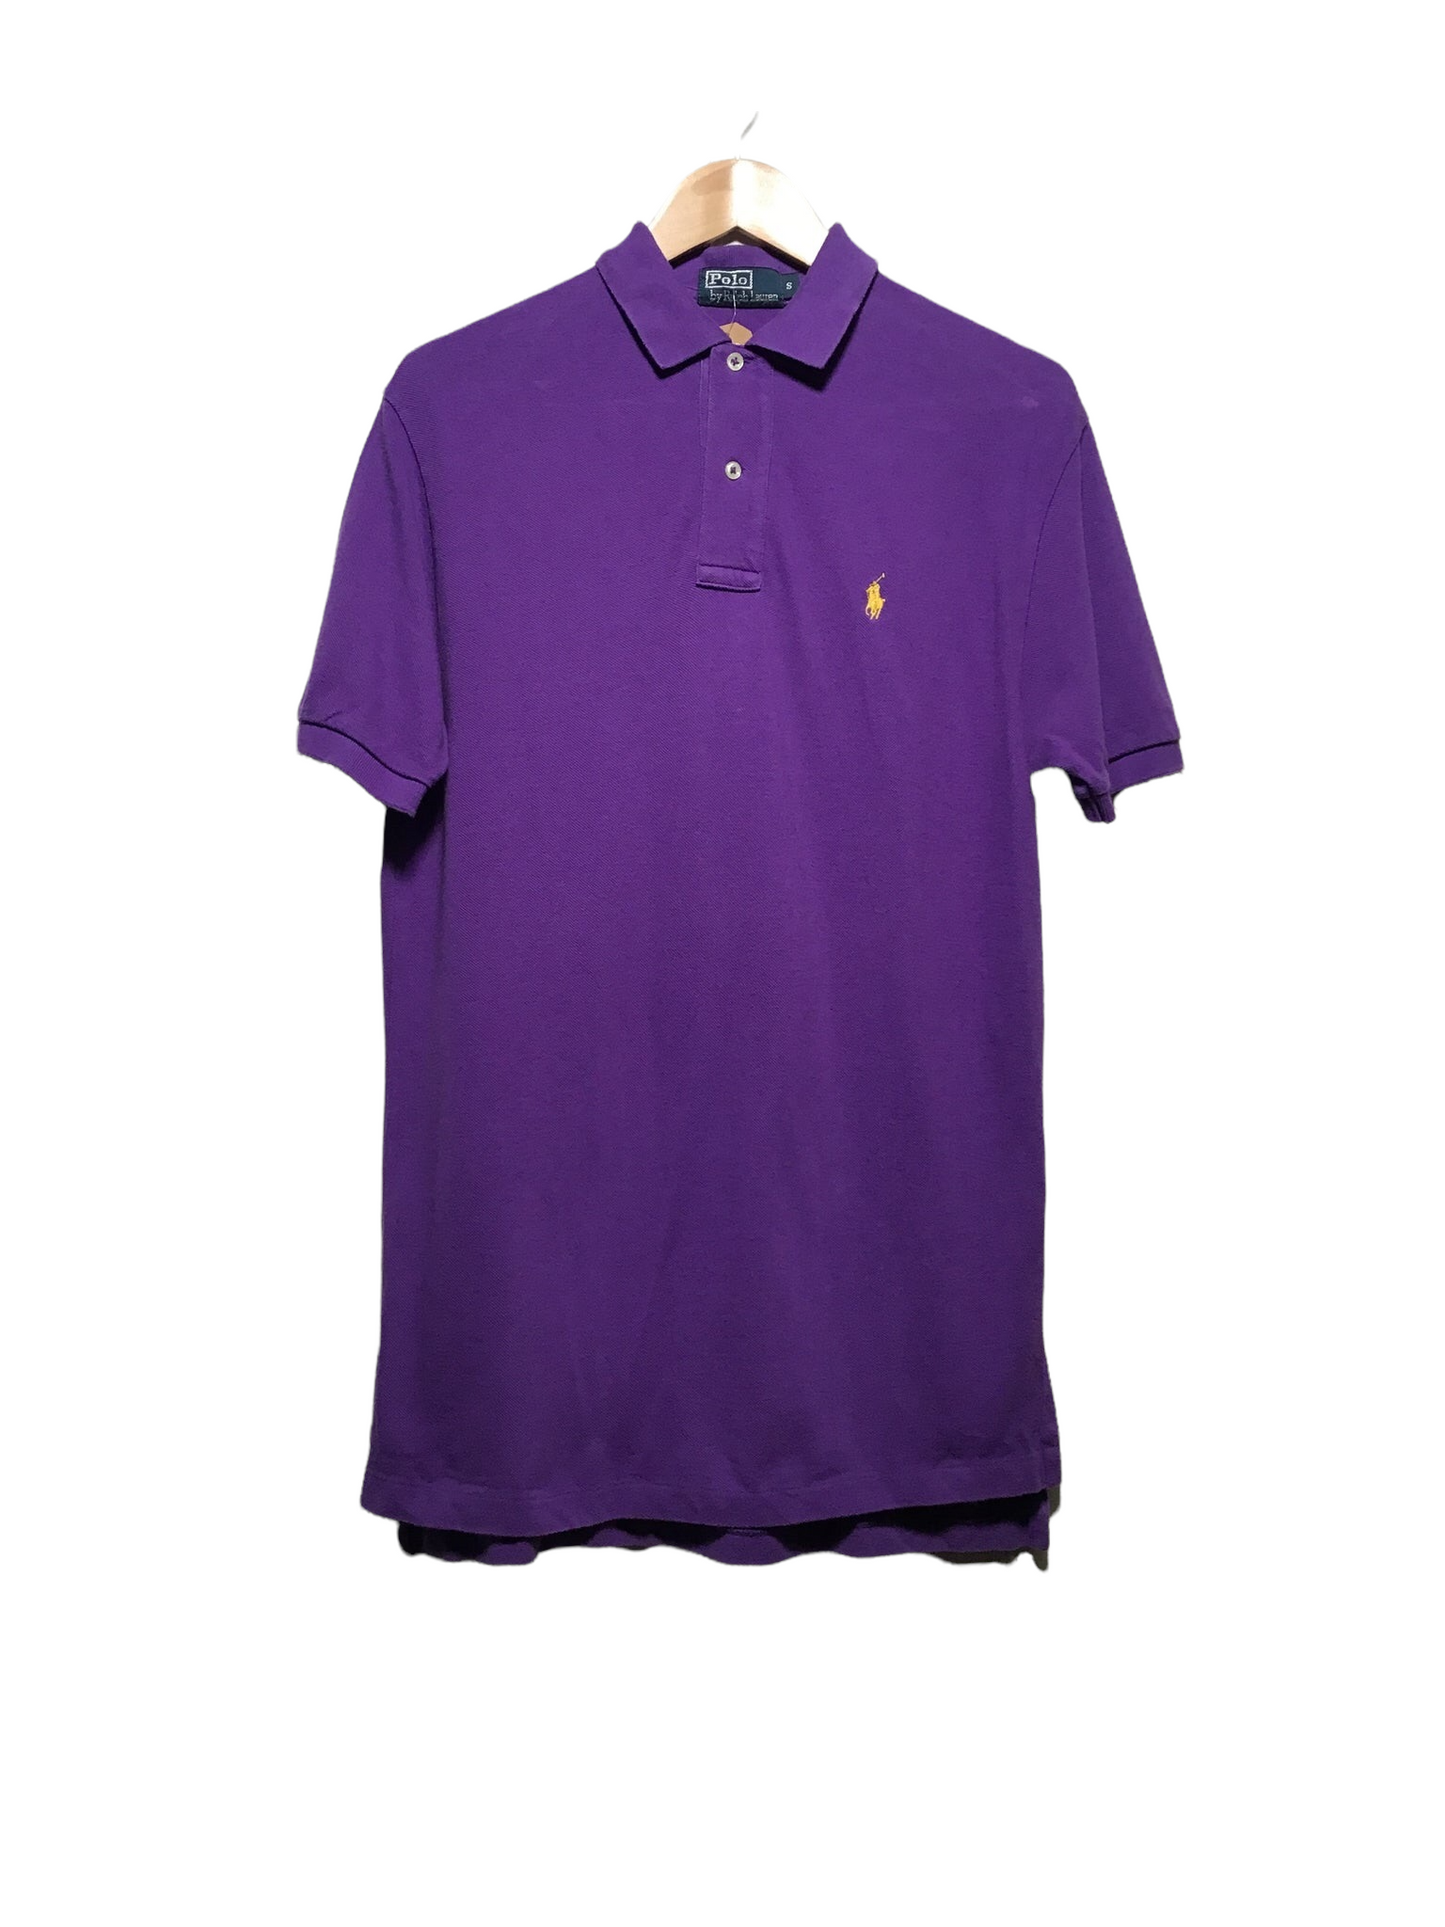 Ralph Lauren Classic Polo Shirt (Size M)